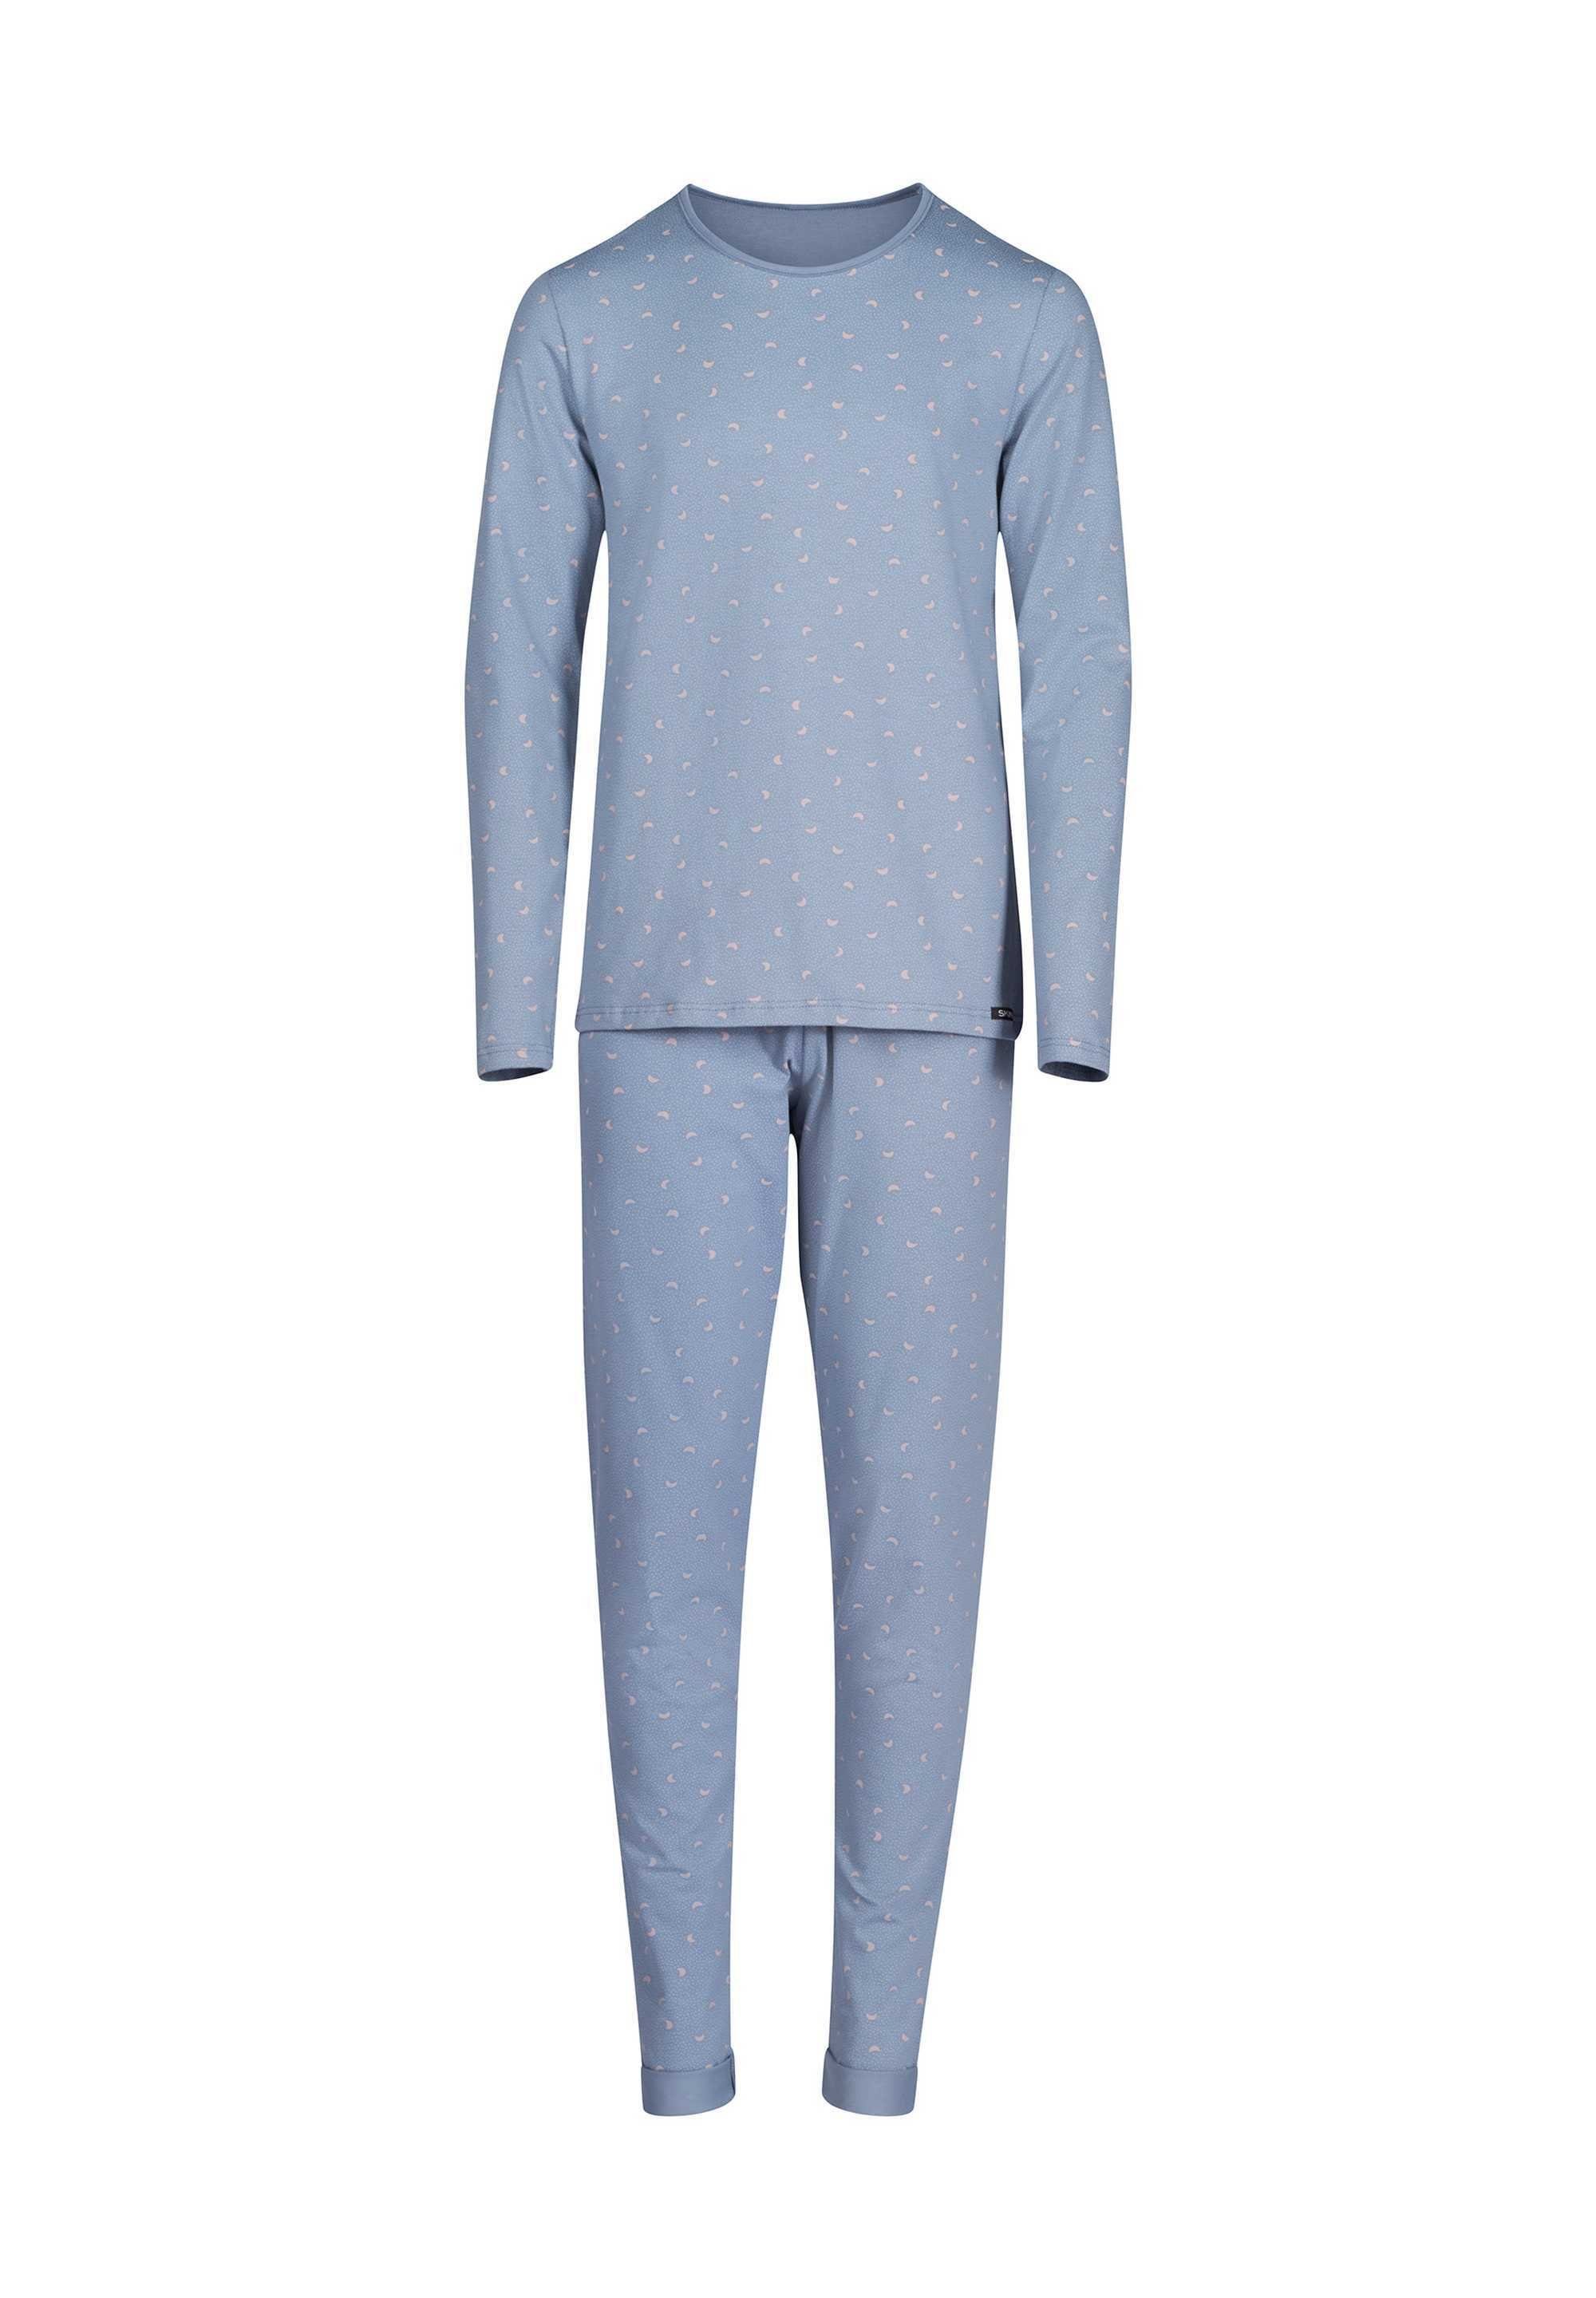 Skiny Pyjama Mädchen Schlafanzug Set - lang, Kinder, 2-tlg. Grau-Blau